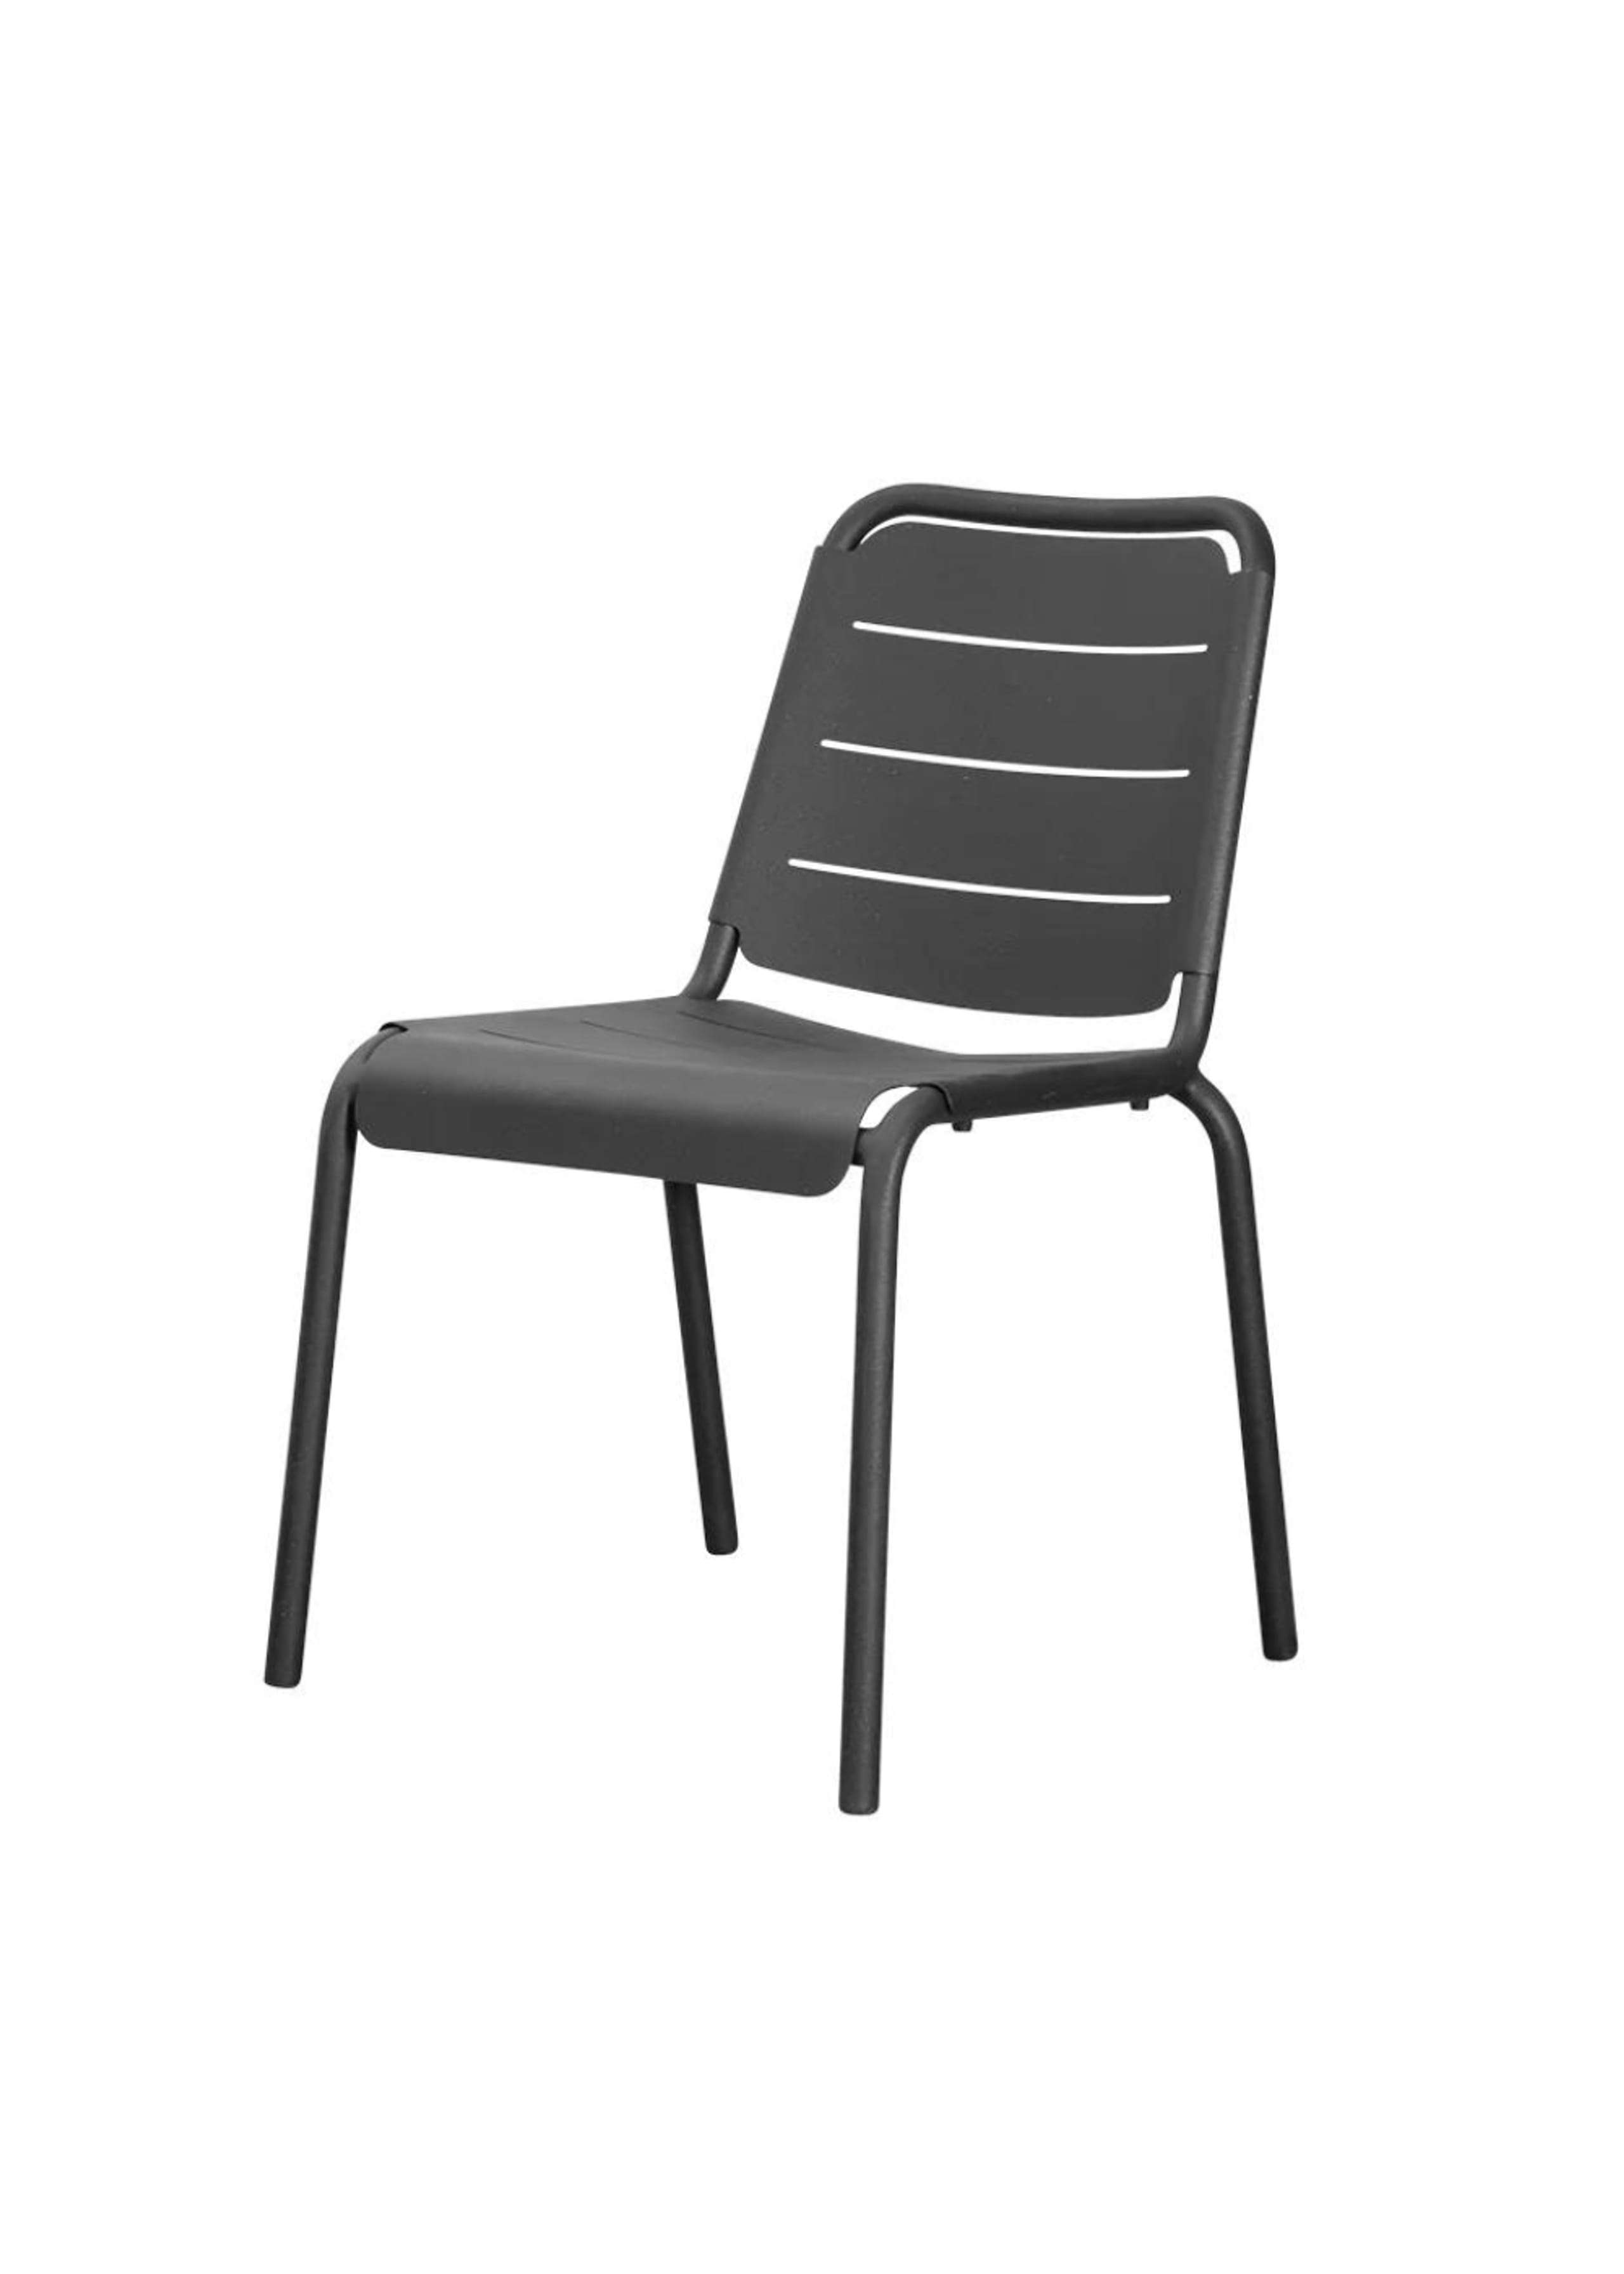 Cane-line - Chair - Copenhagen stol u. armlæn - Lava Grey, Aluminium